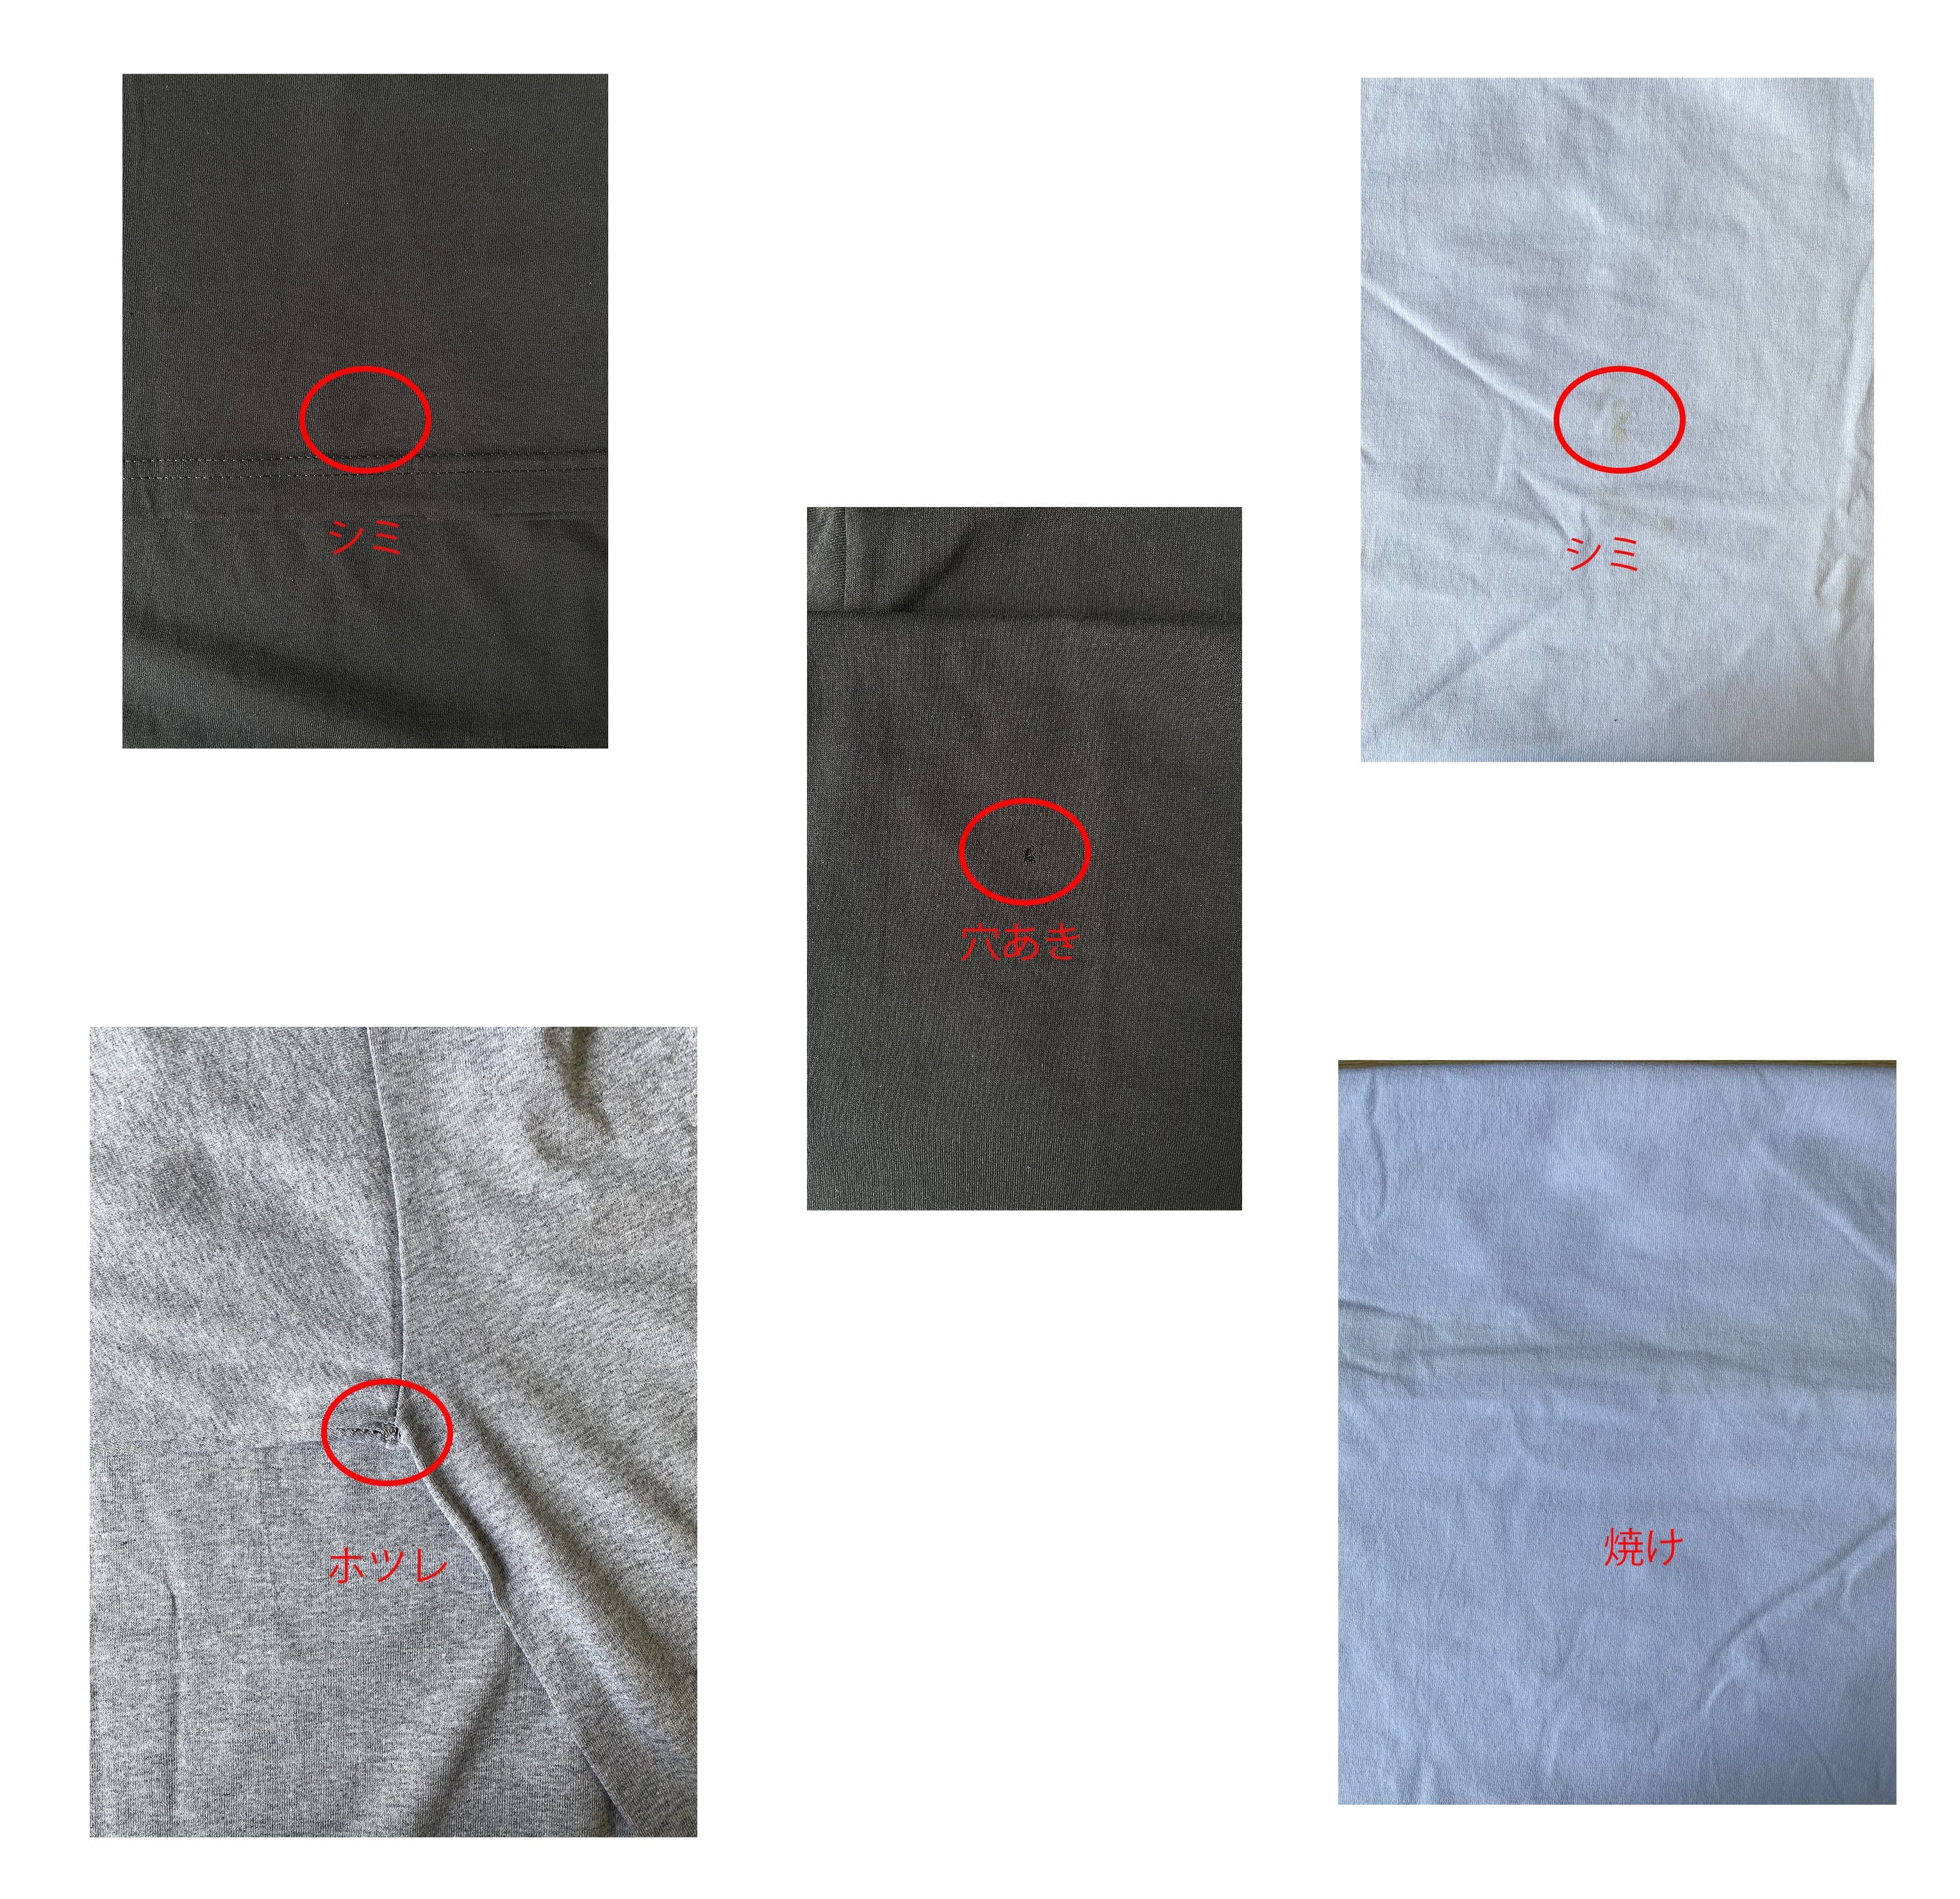 【B品SALE】GILDAN ギルダン 6.0 oz ウルトラコットン Tシャツ (品番2000_IQ)